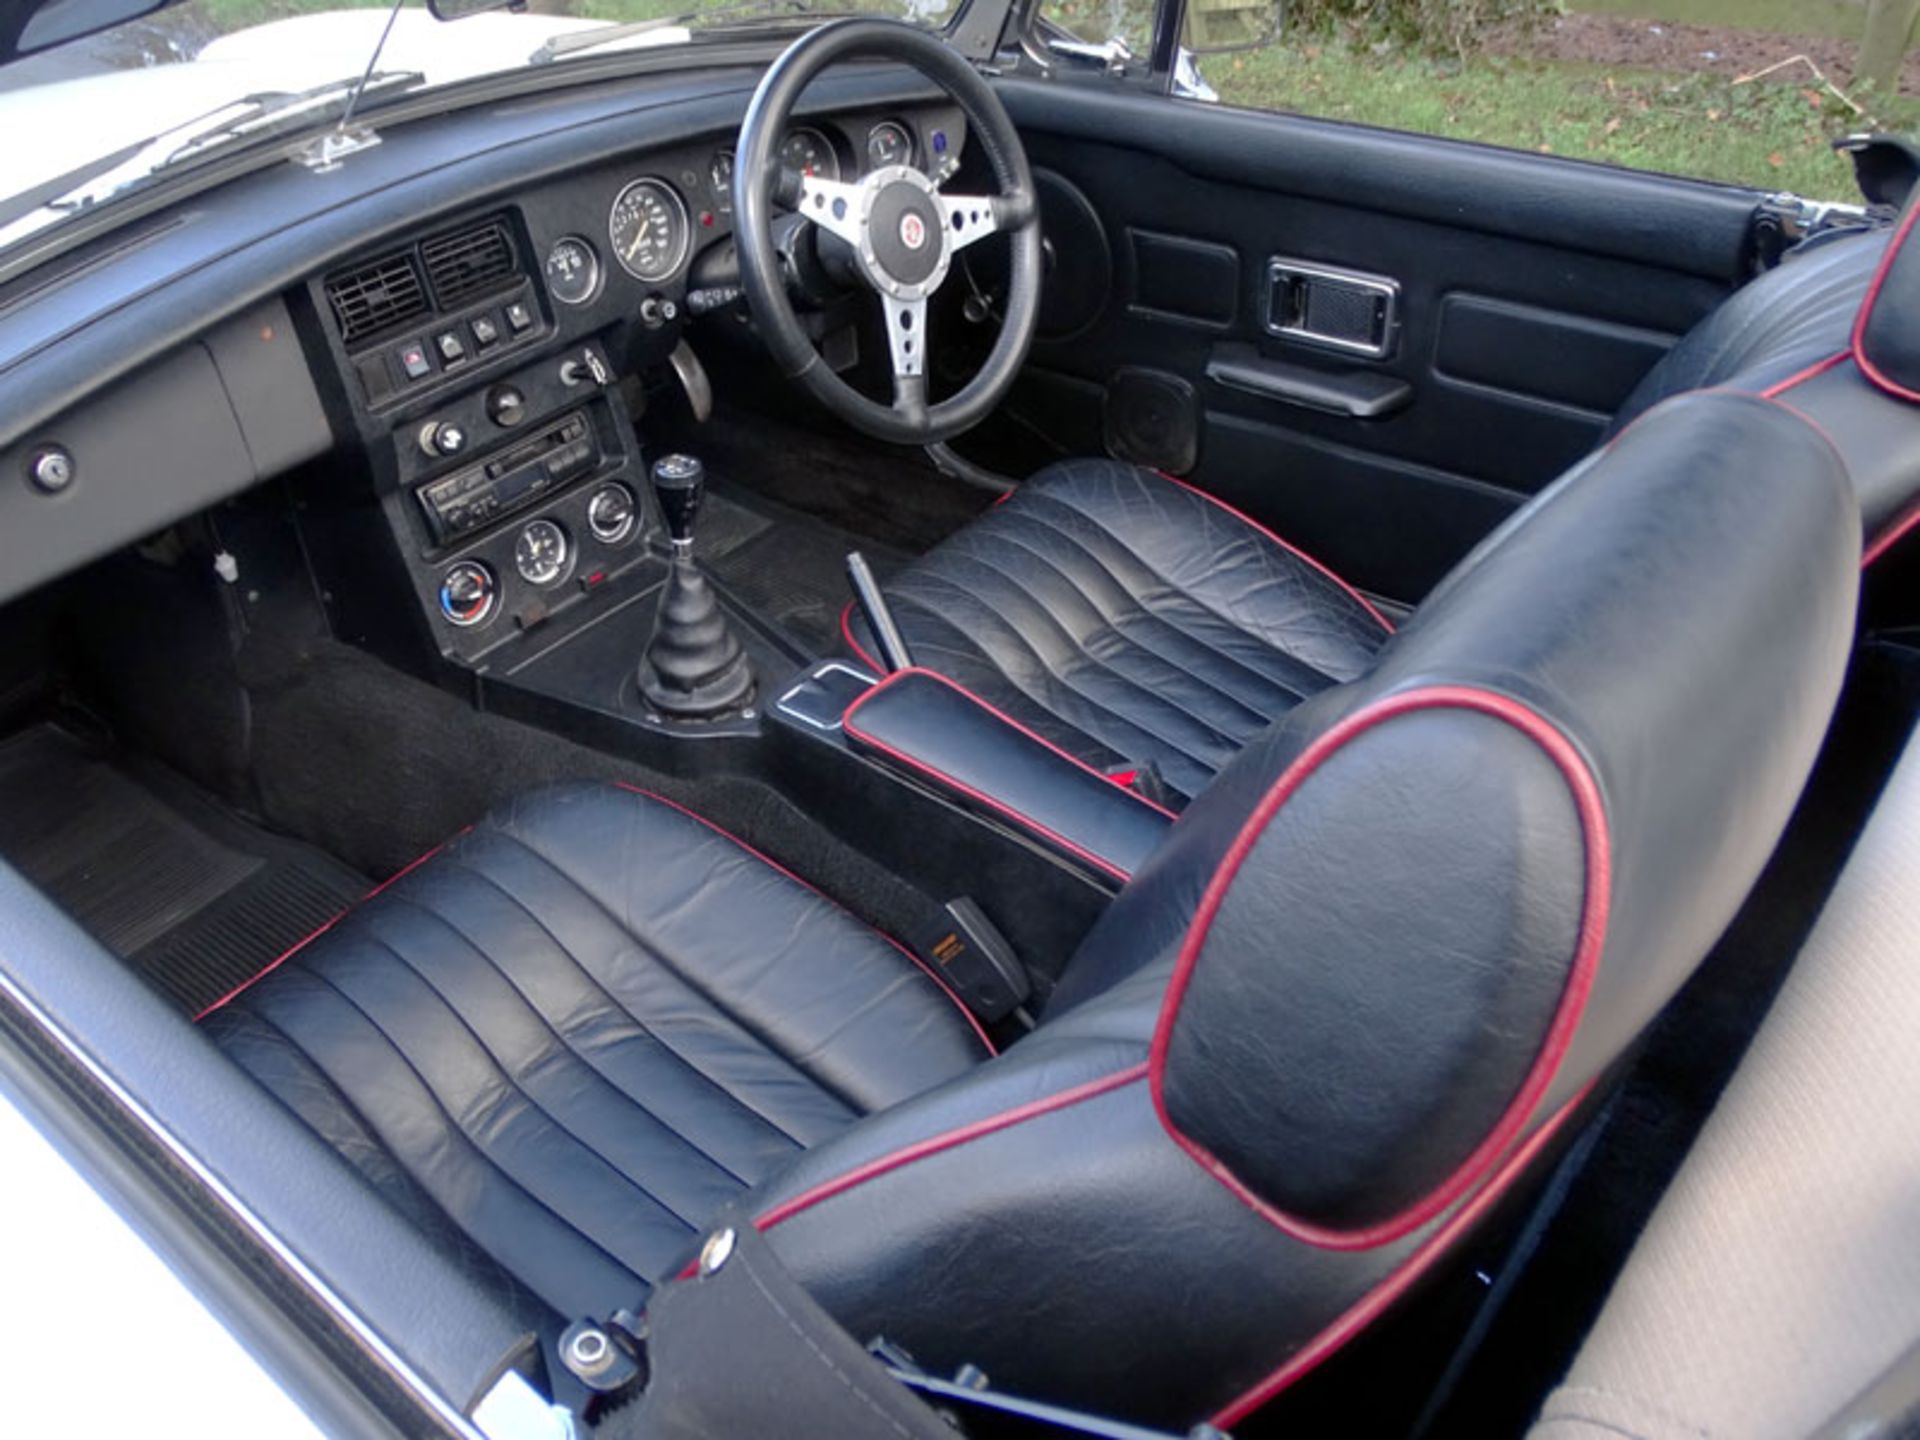 1976 MG B Roadster - Image 5 of 9